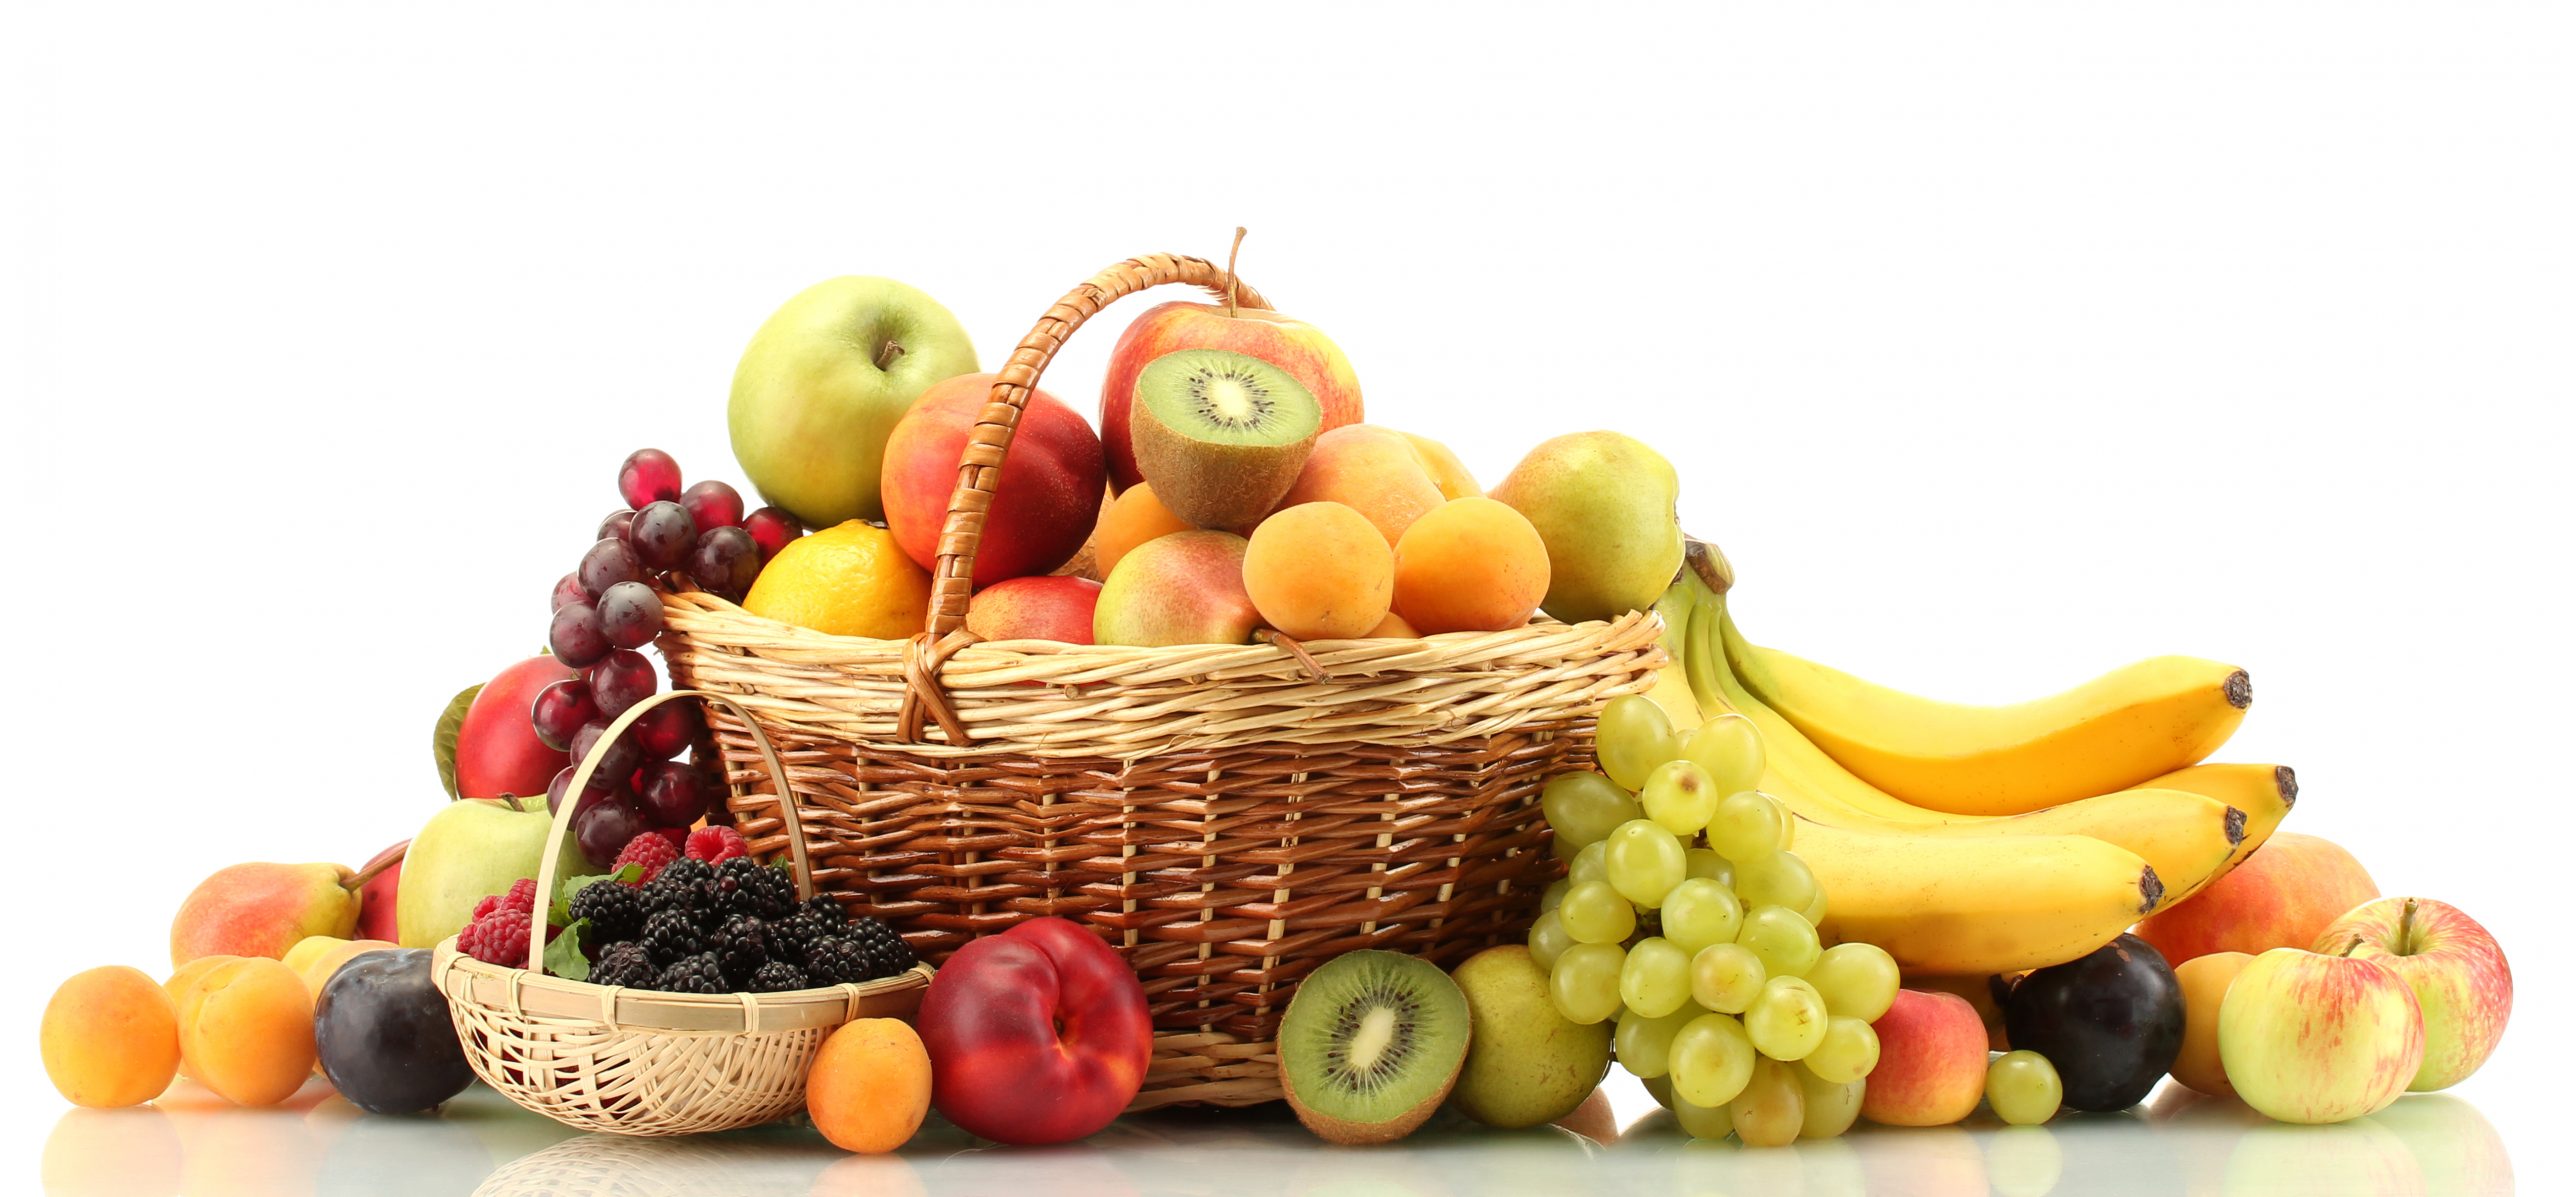 Apple fruit - https://depositphotos.com/25092895/stock-photo-assortment-of-exotic-fruits-and.html